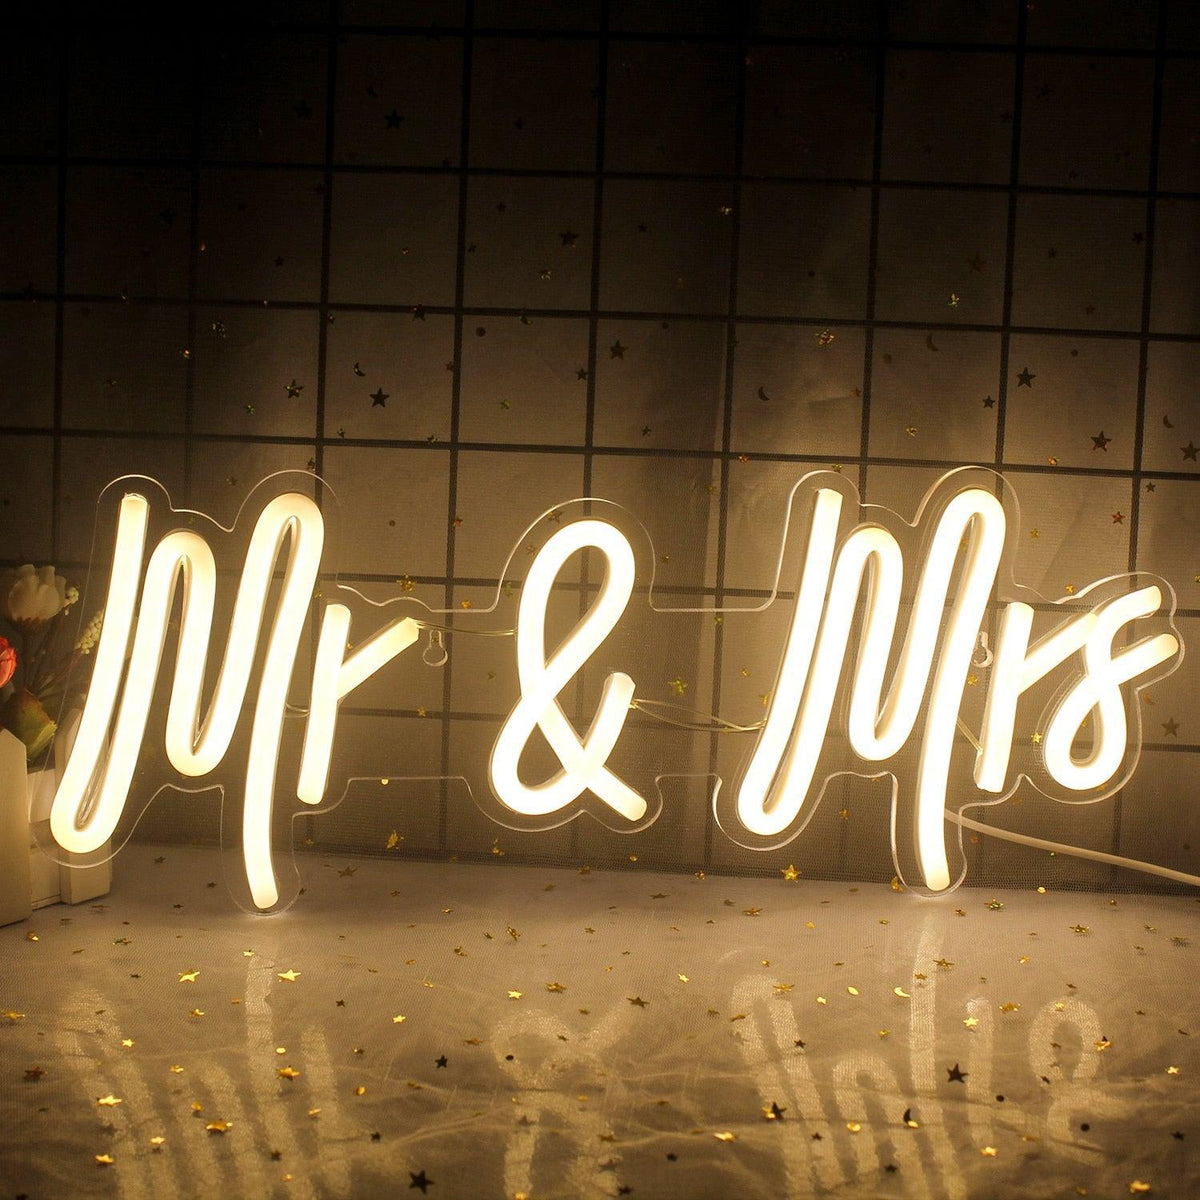 Just Married Neon Signs - Luxurious Weddings